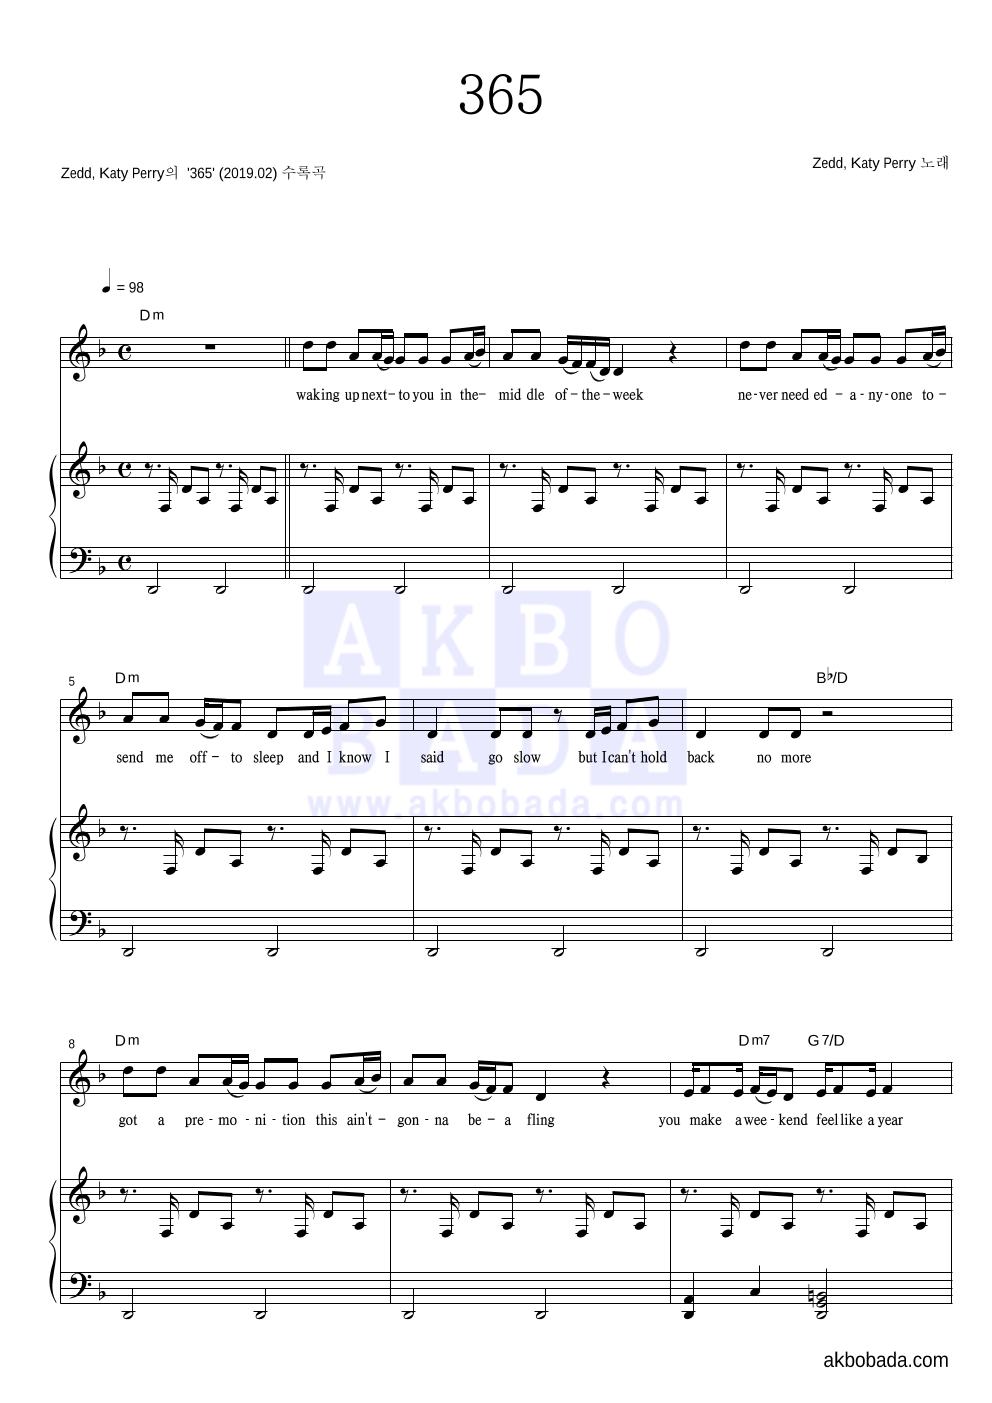 Zedd,Katy Perry - 365 피아노 3단 악보 